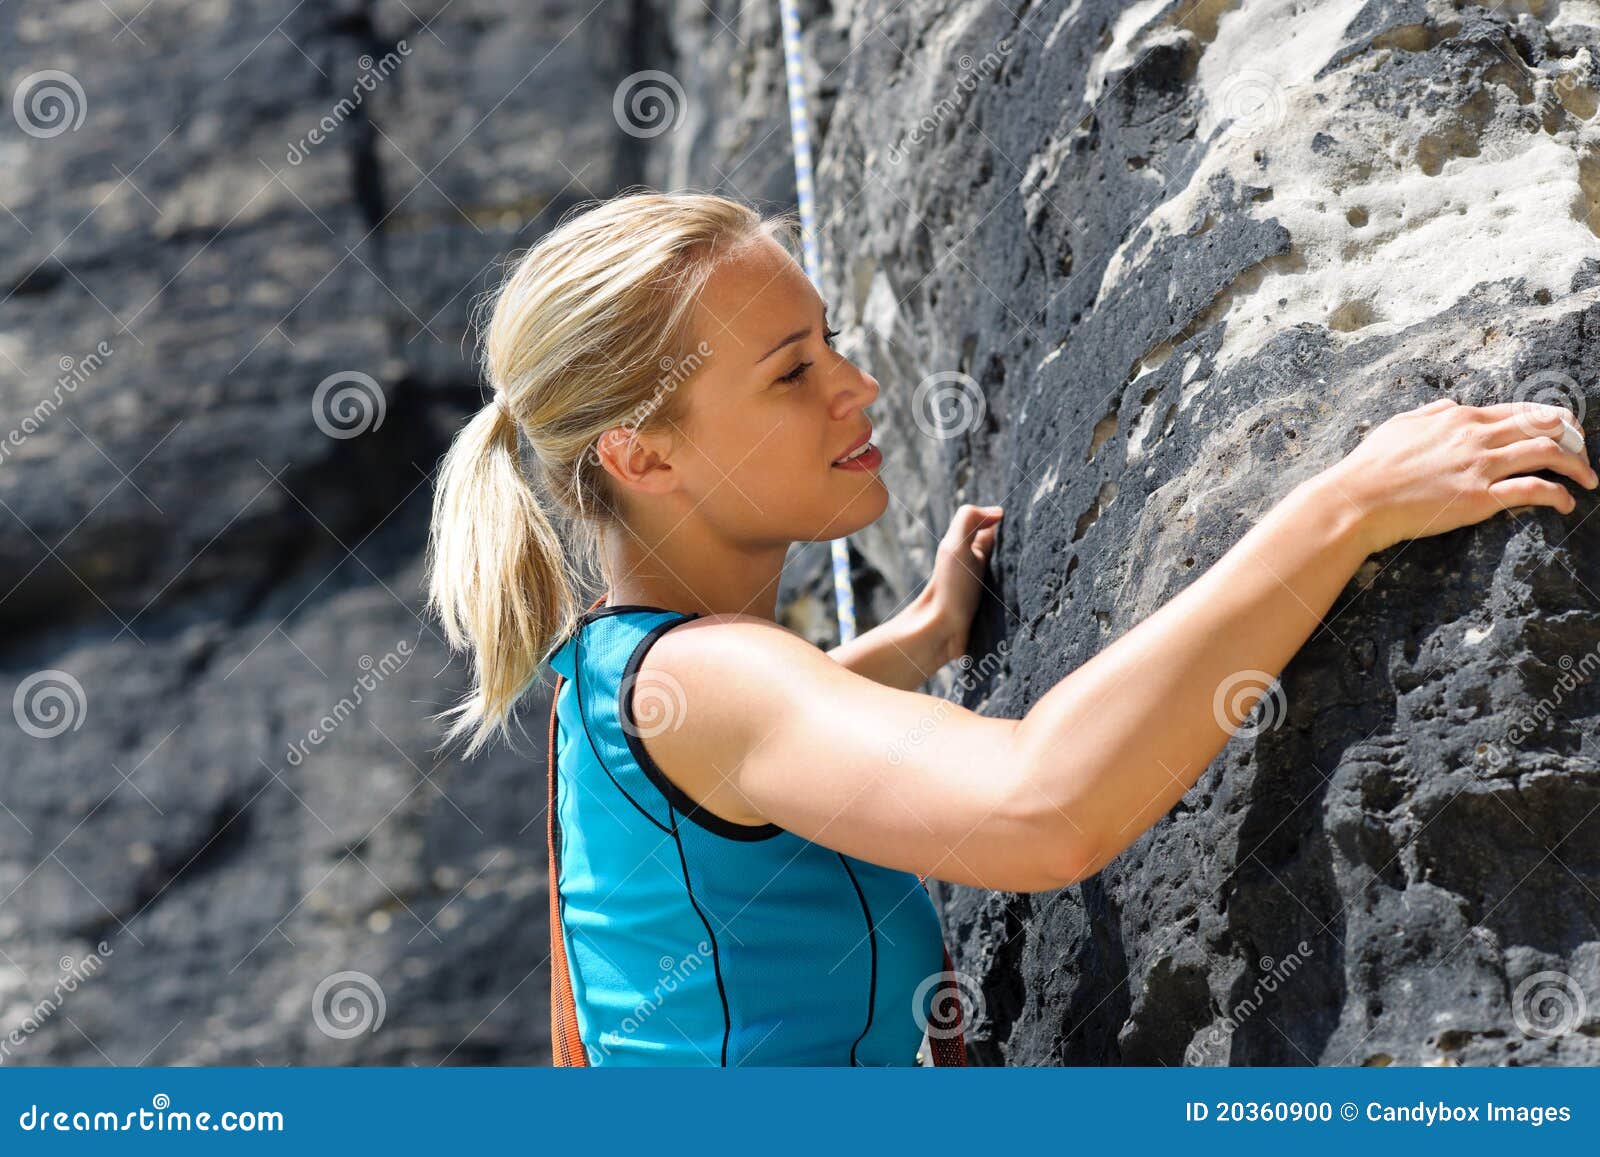 13,703 Woman Climbing Rope Stock Photos - Free & Royalty-Free